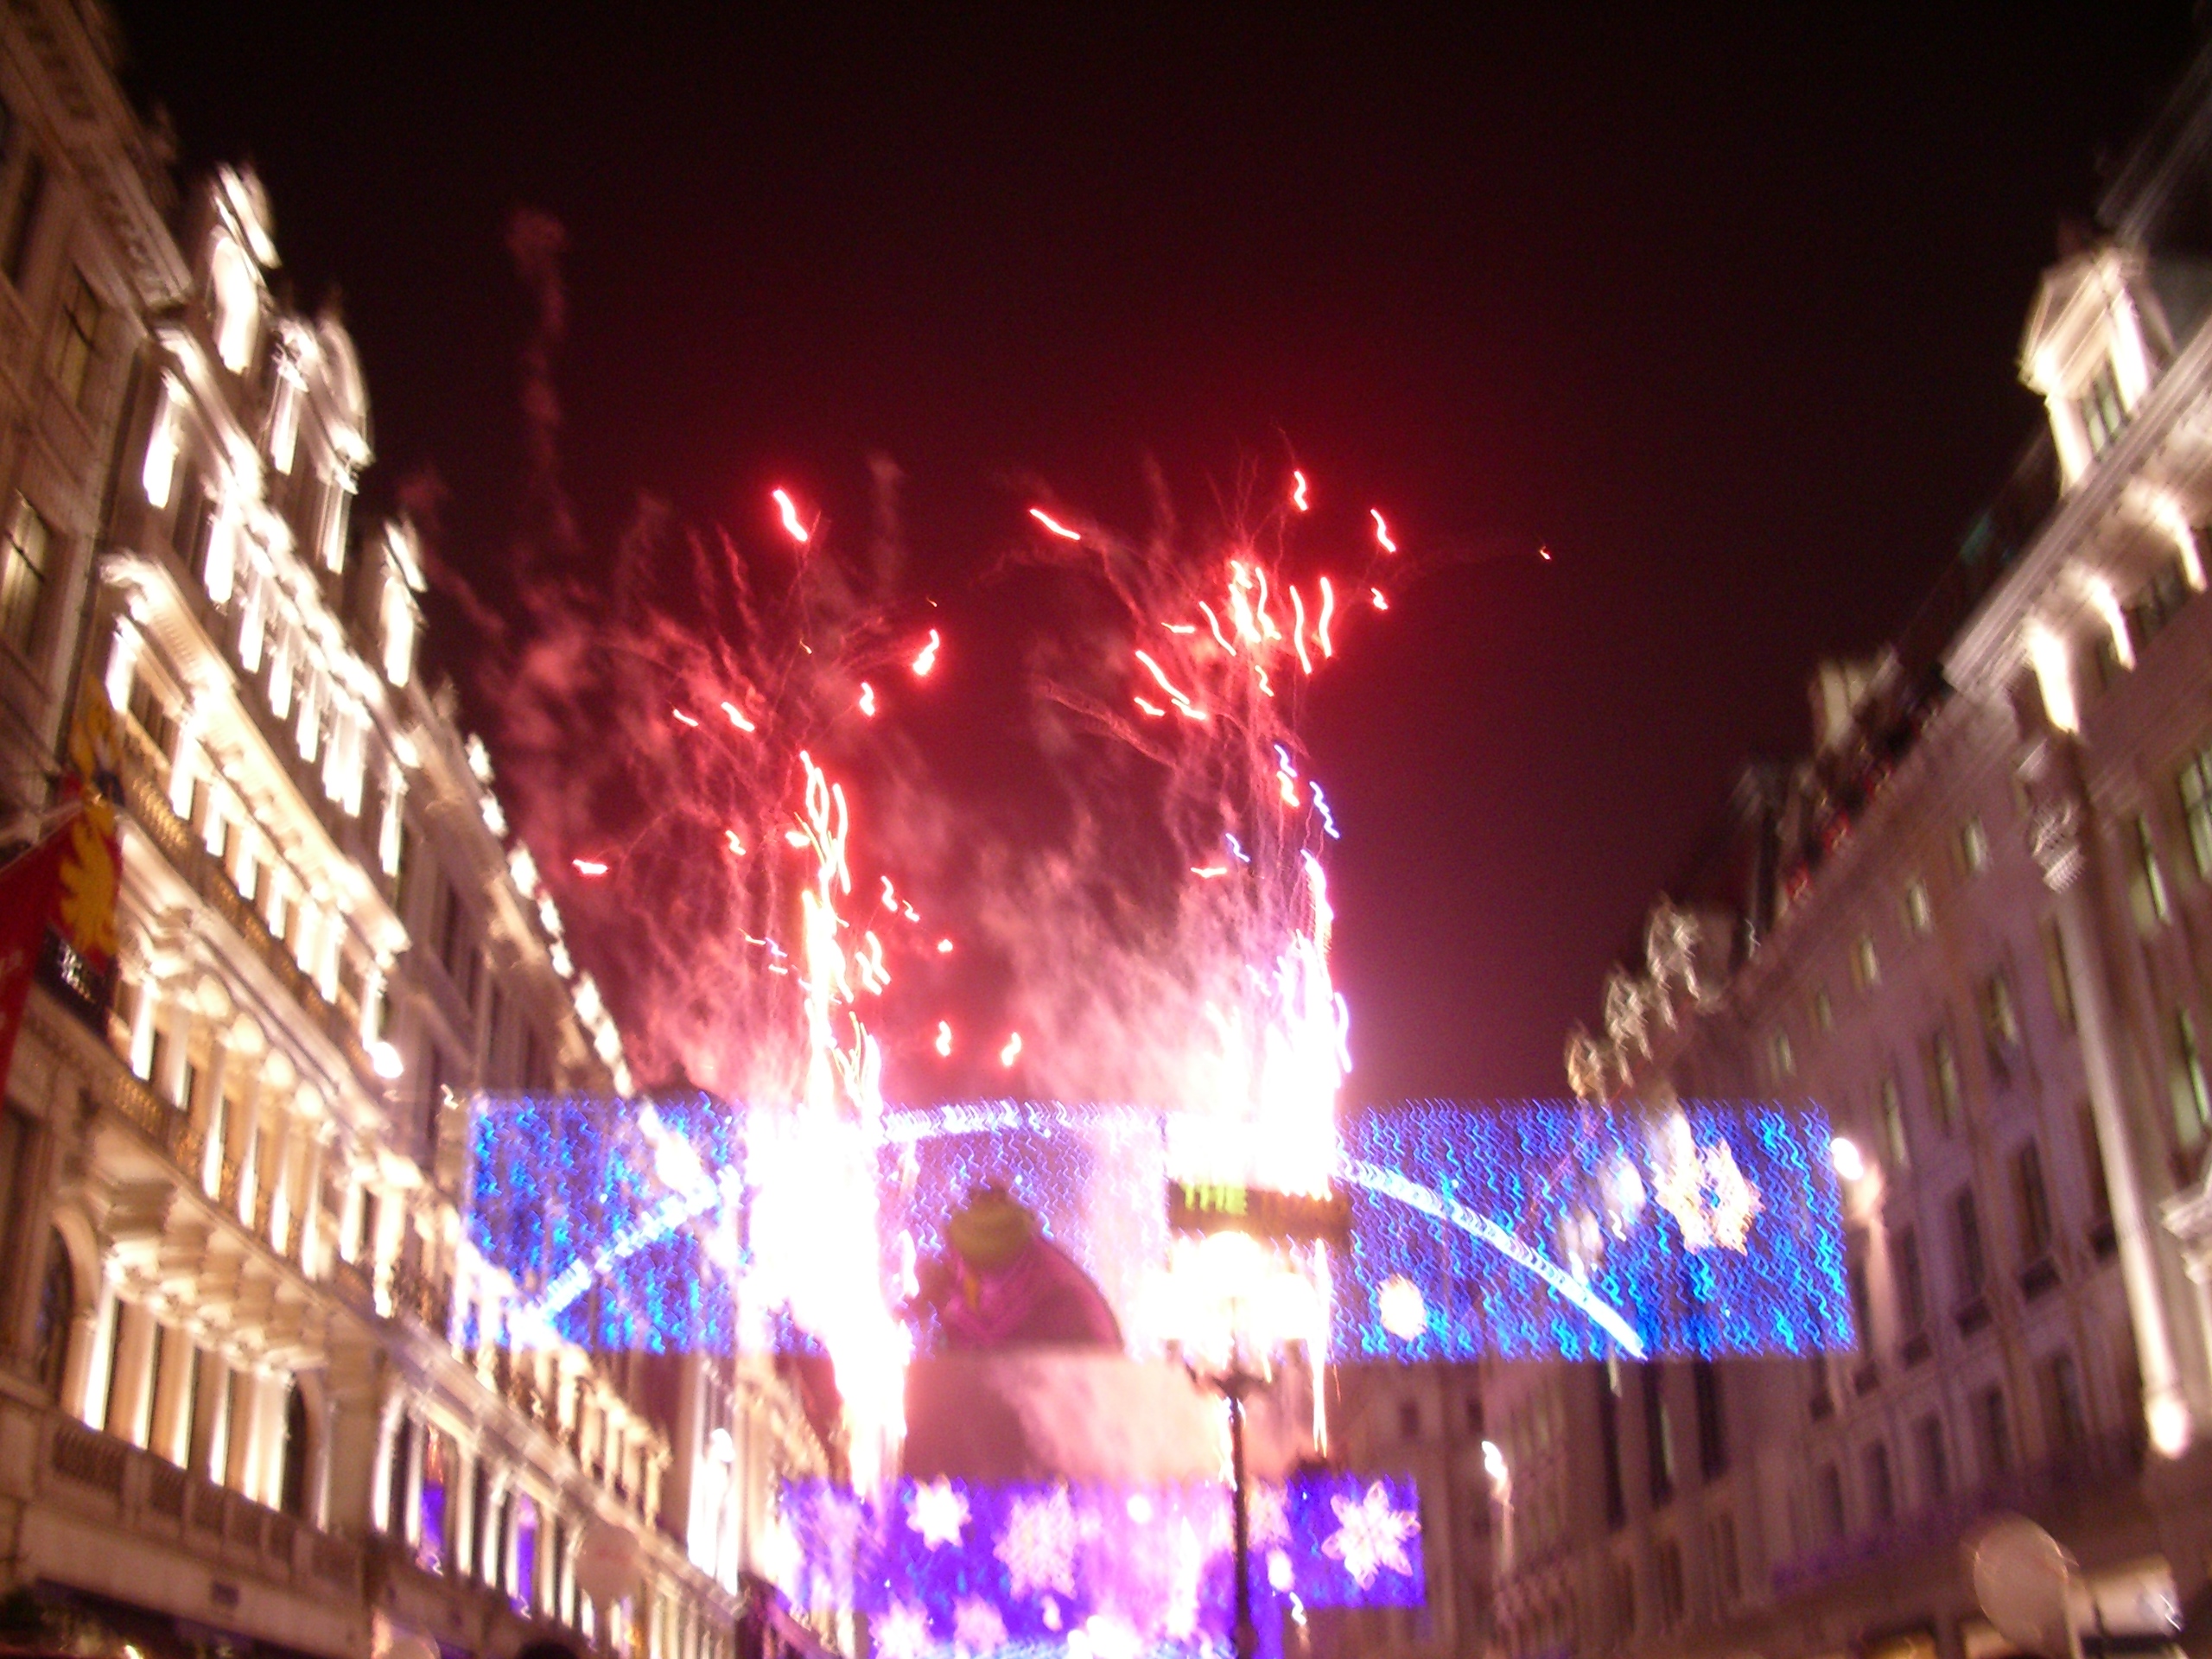 Christmas Lights London Oxford Street